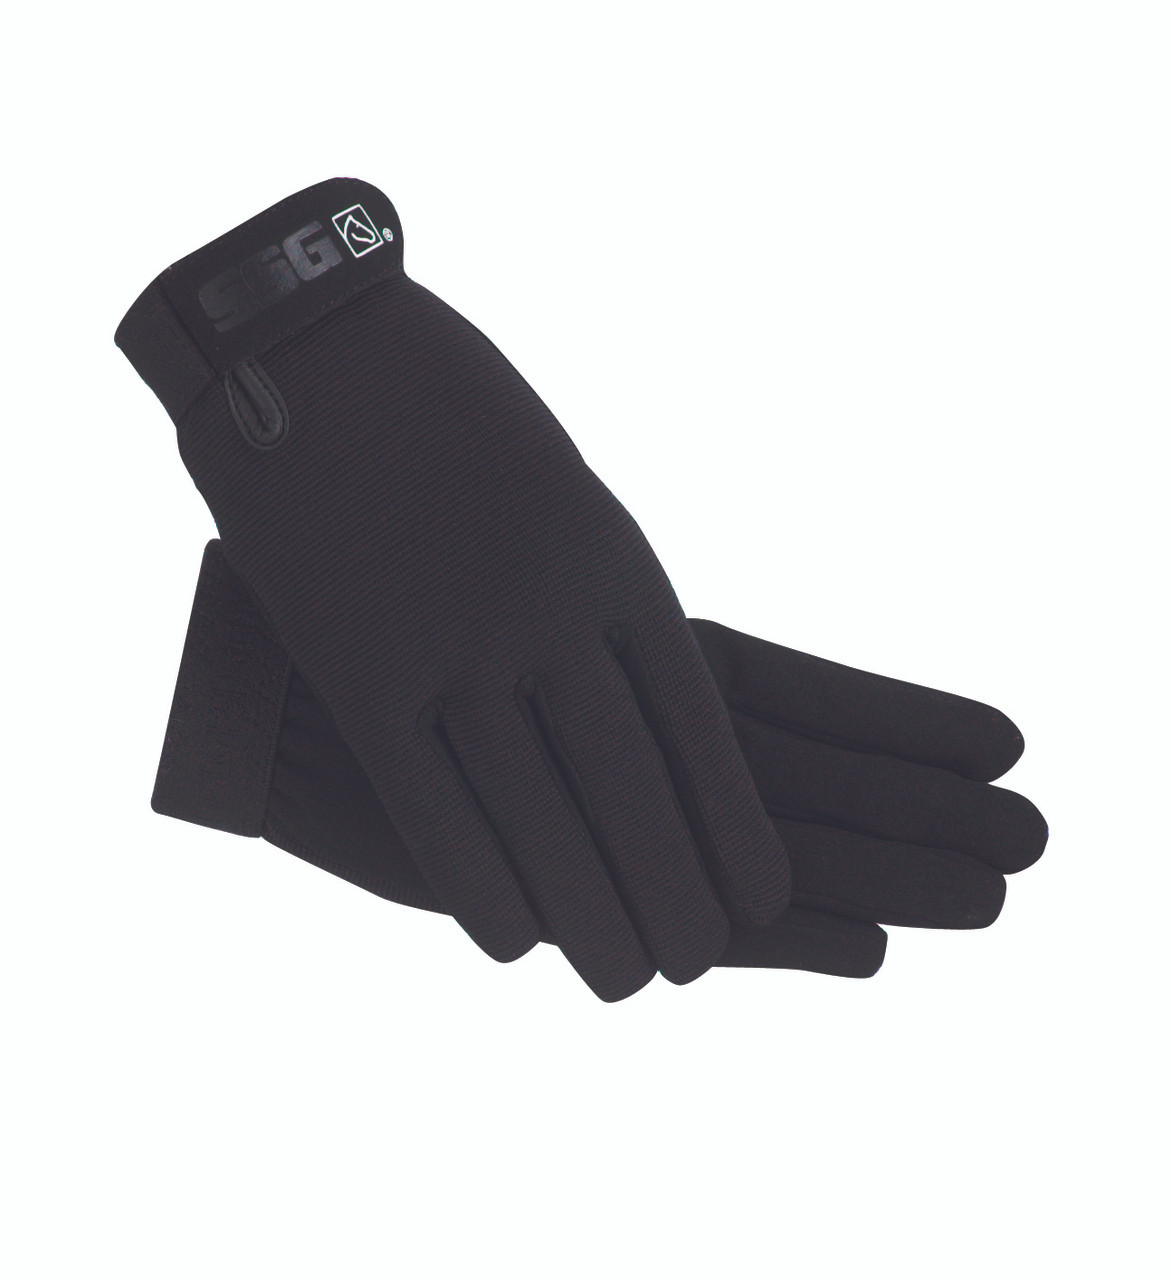 SSG® Original All Weather Riding Gloves